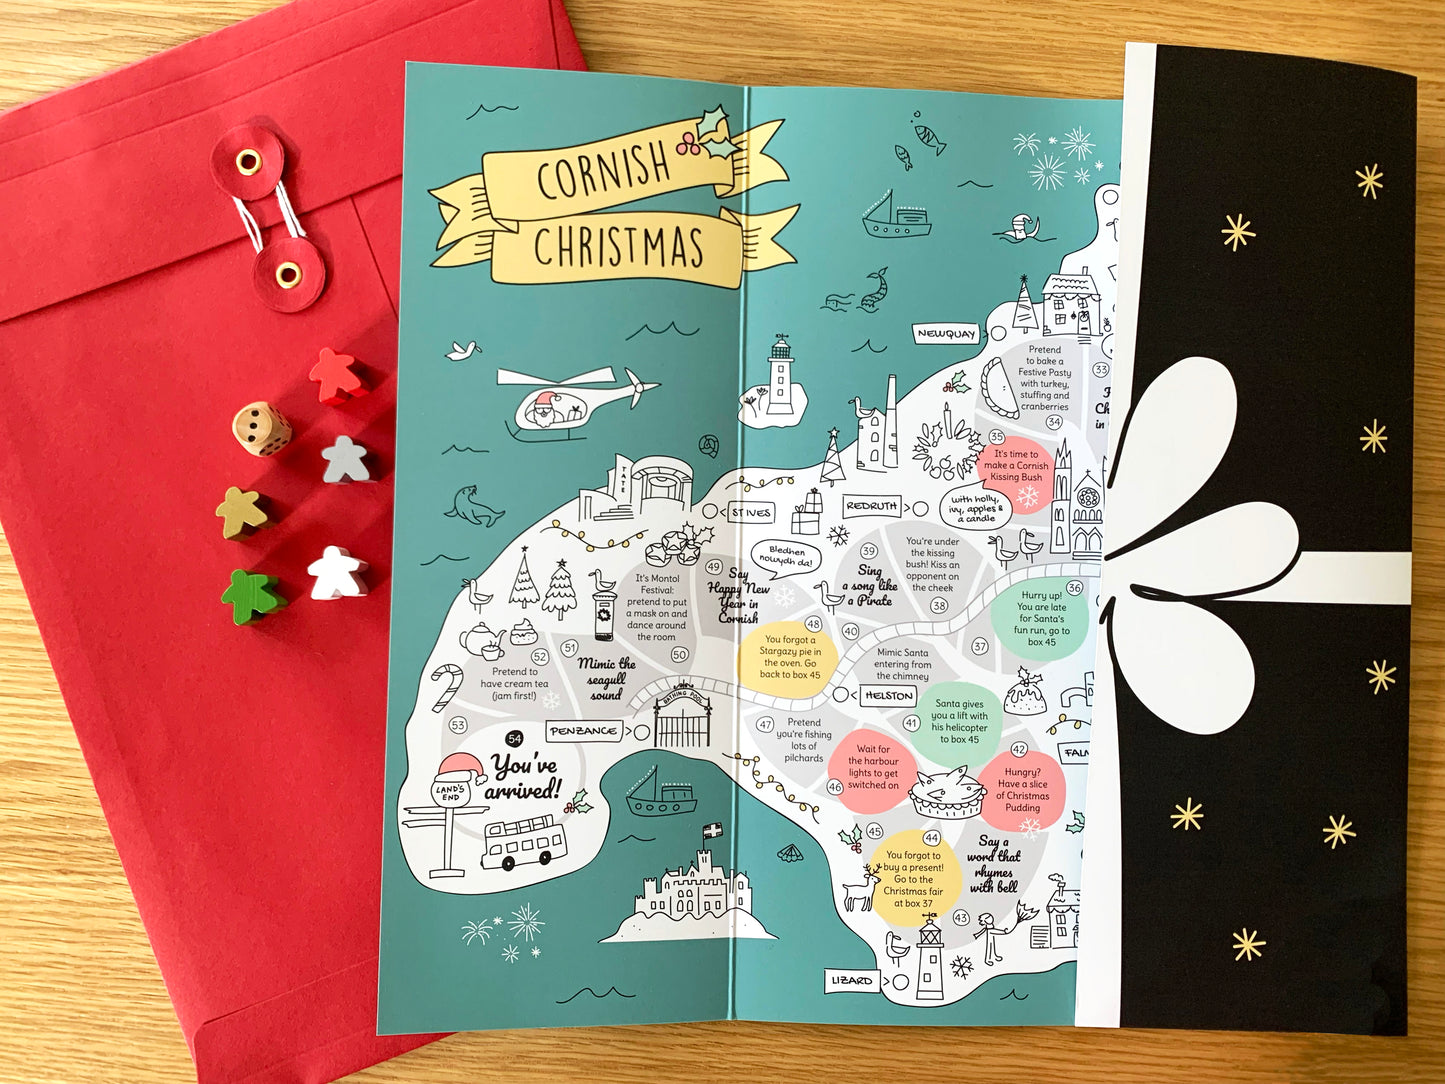 Cornwall Christmas board game pack